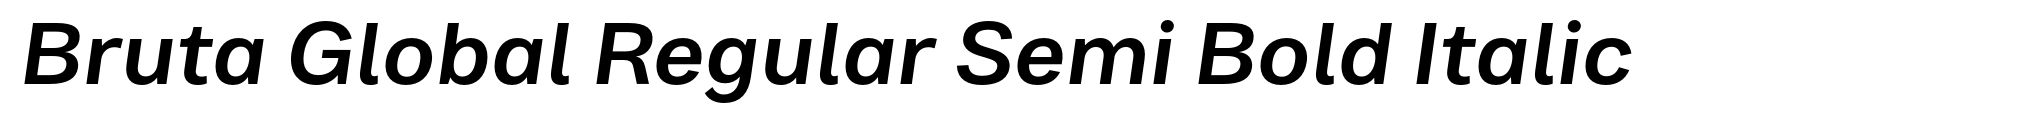 Bruta Global Regular Semi Bold Italic image